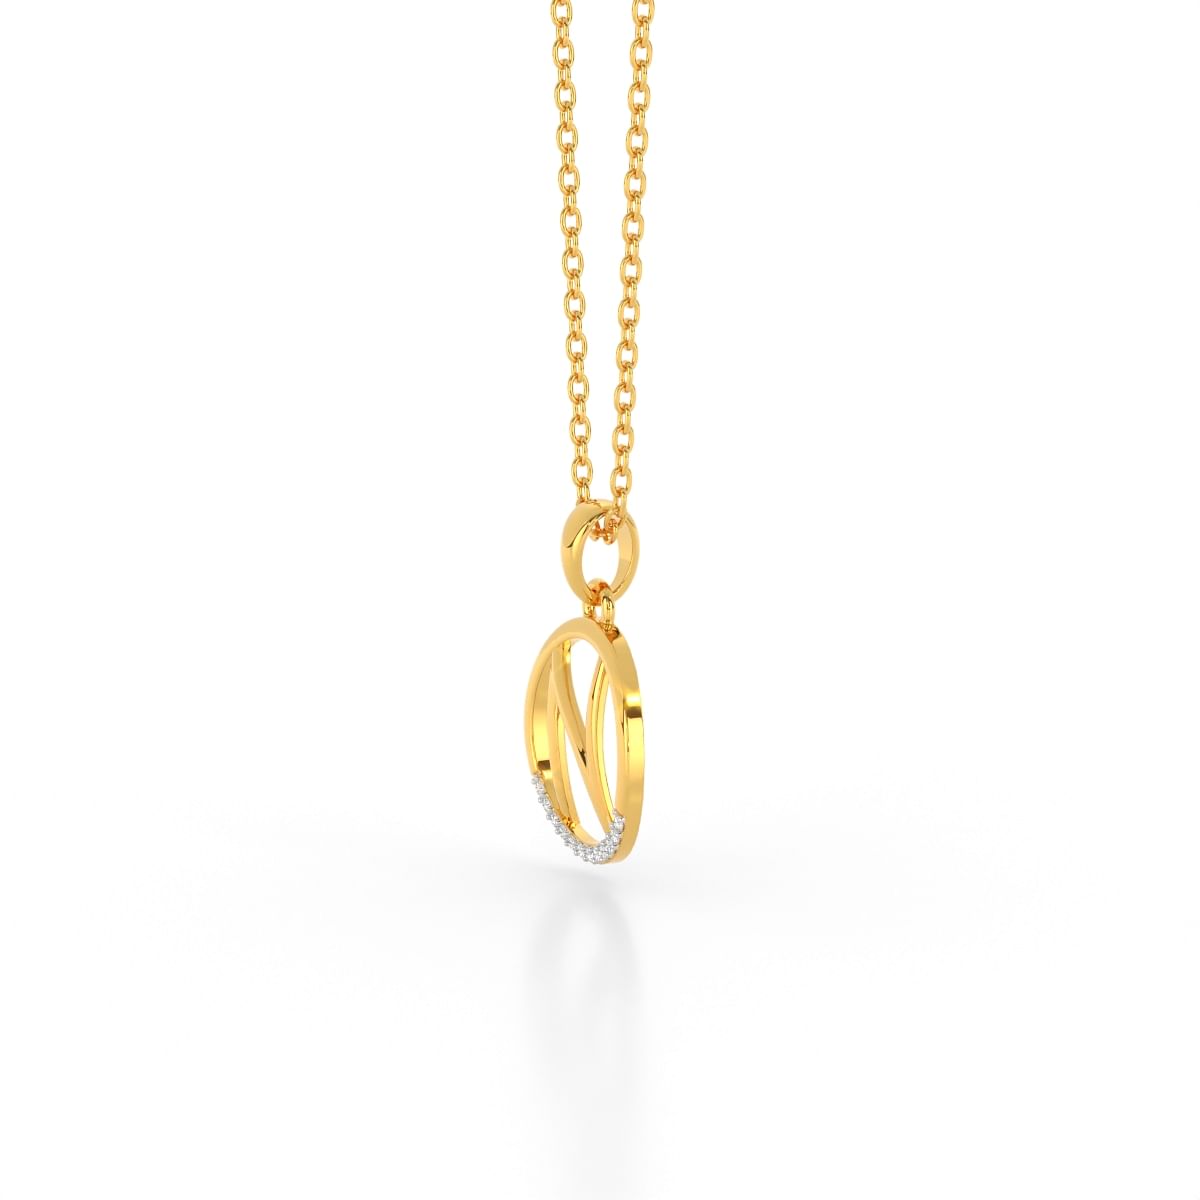 N letter diamond pendant in yellow gold